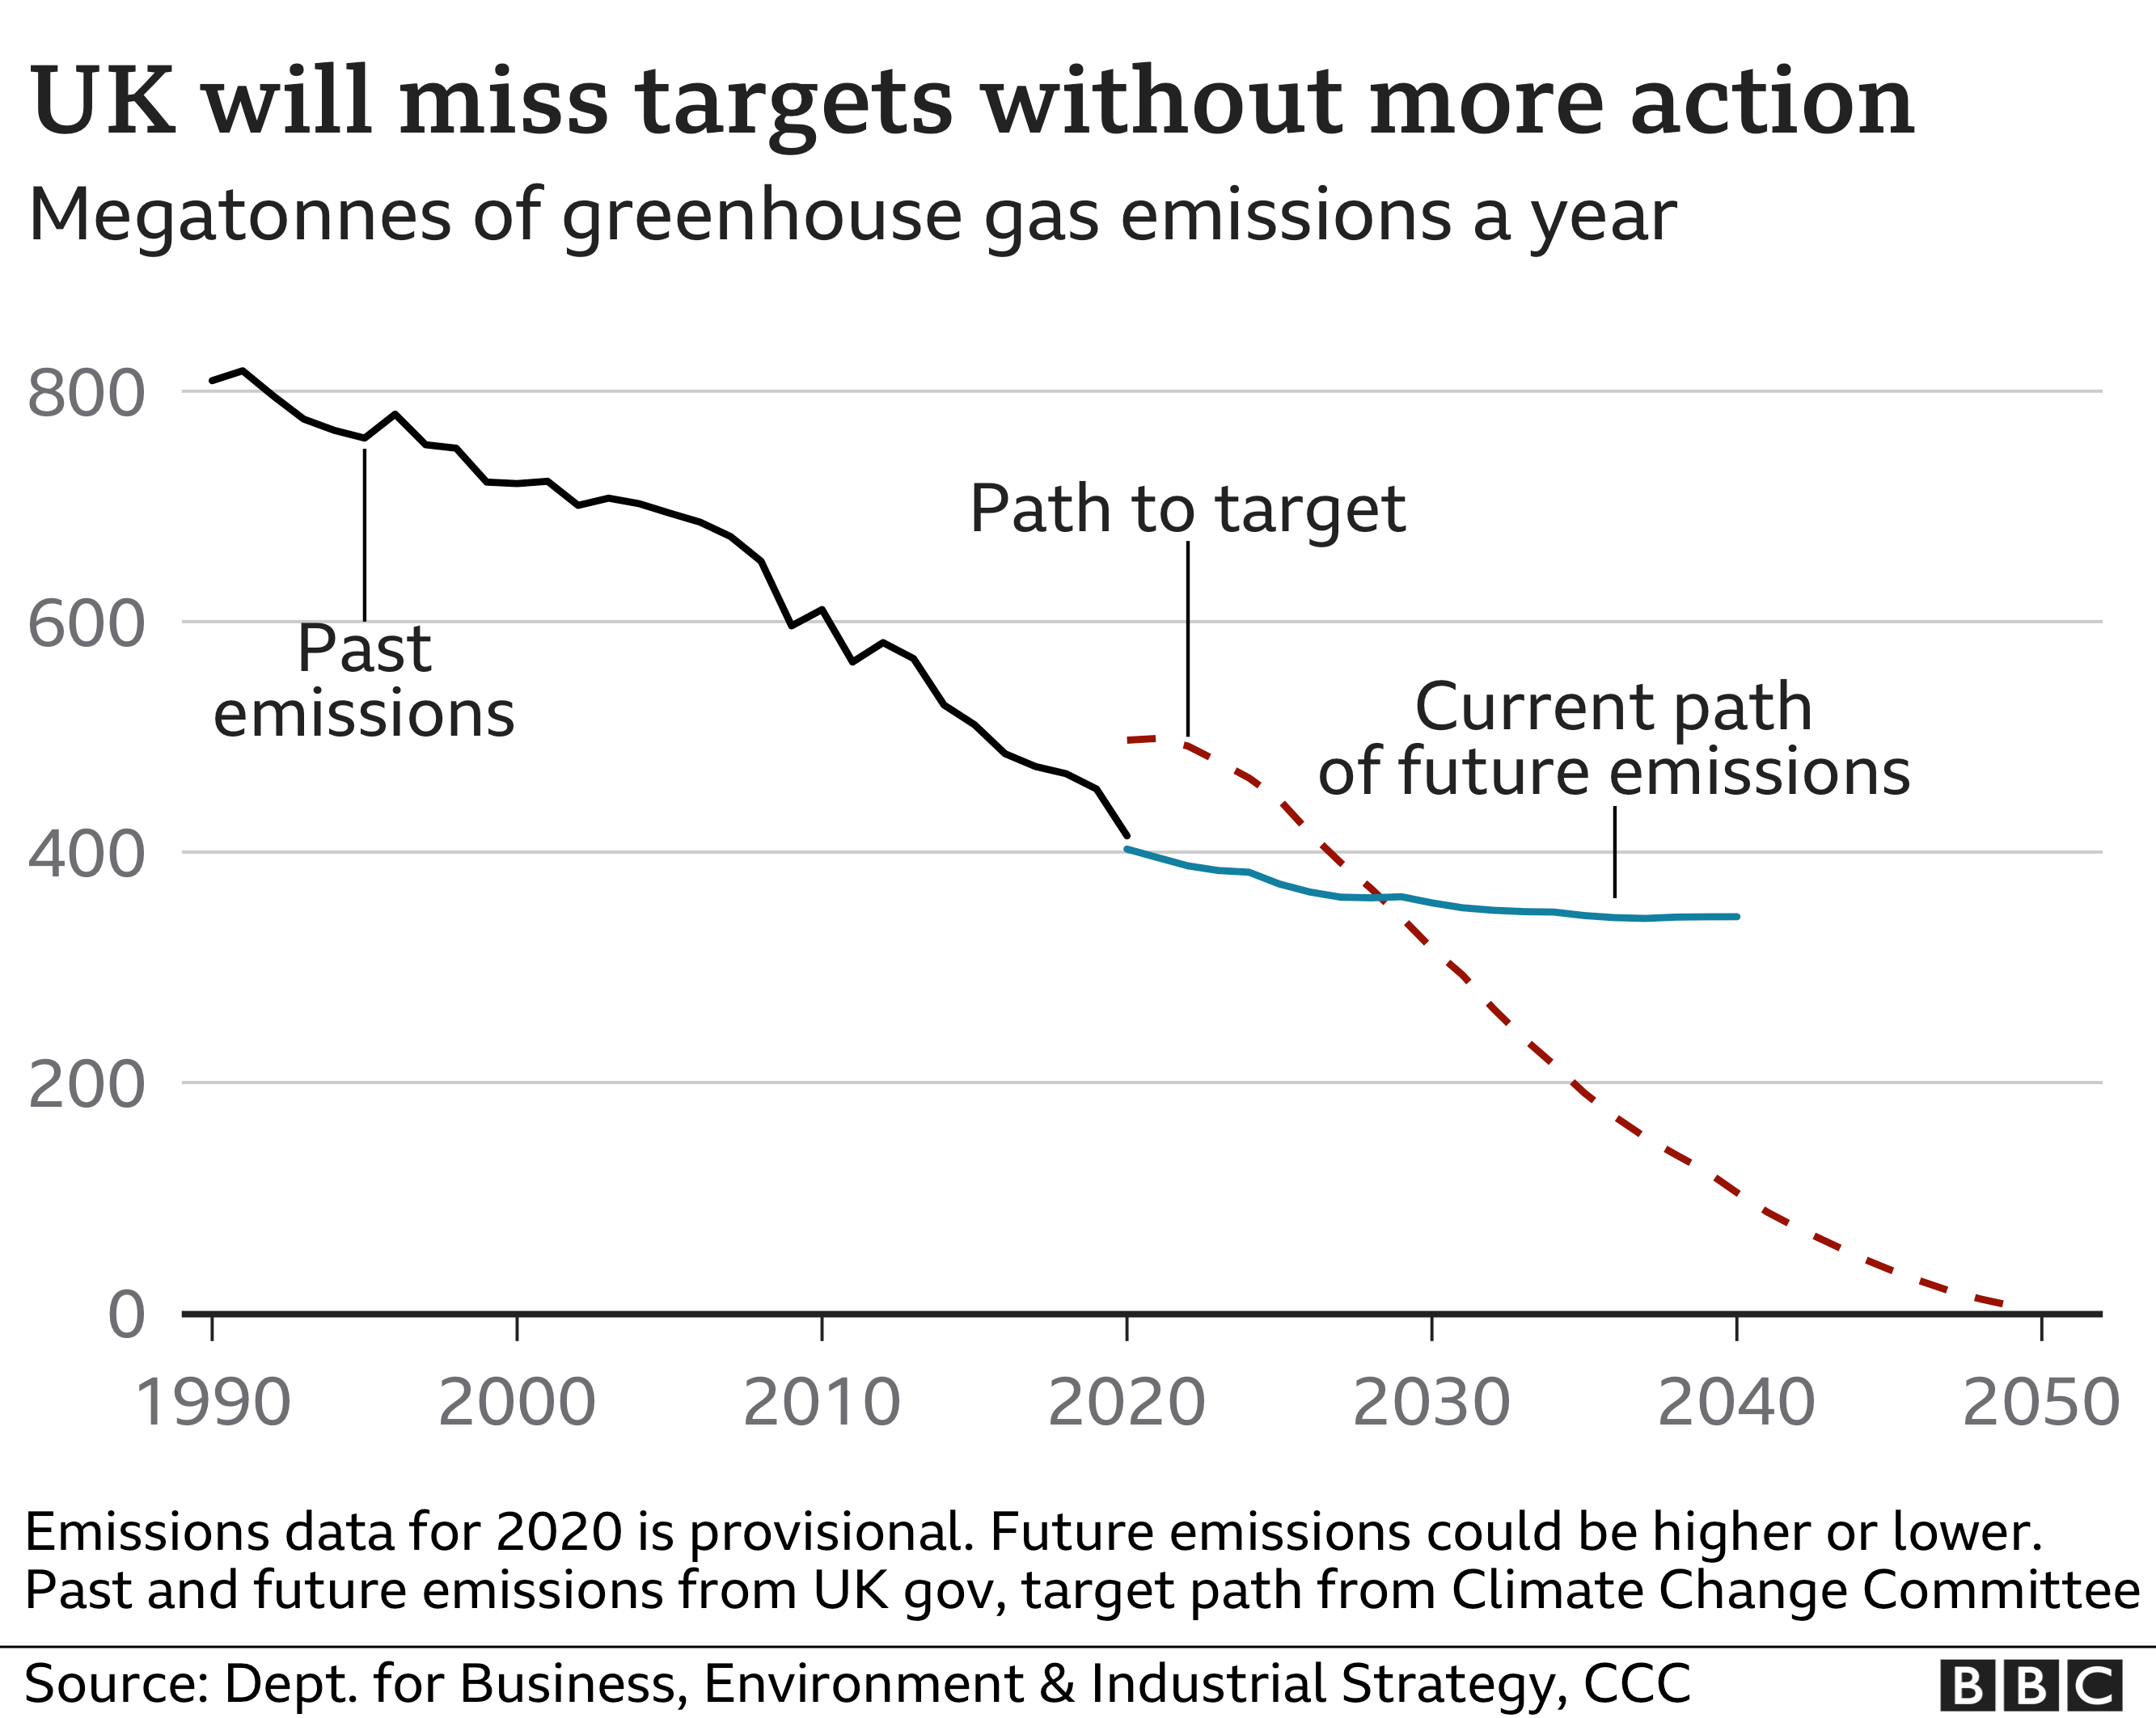 UK emissions and targets chart